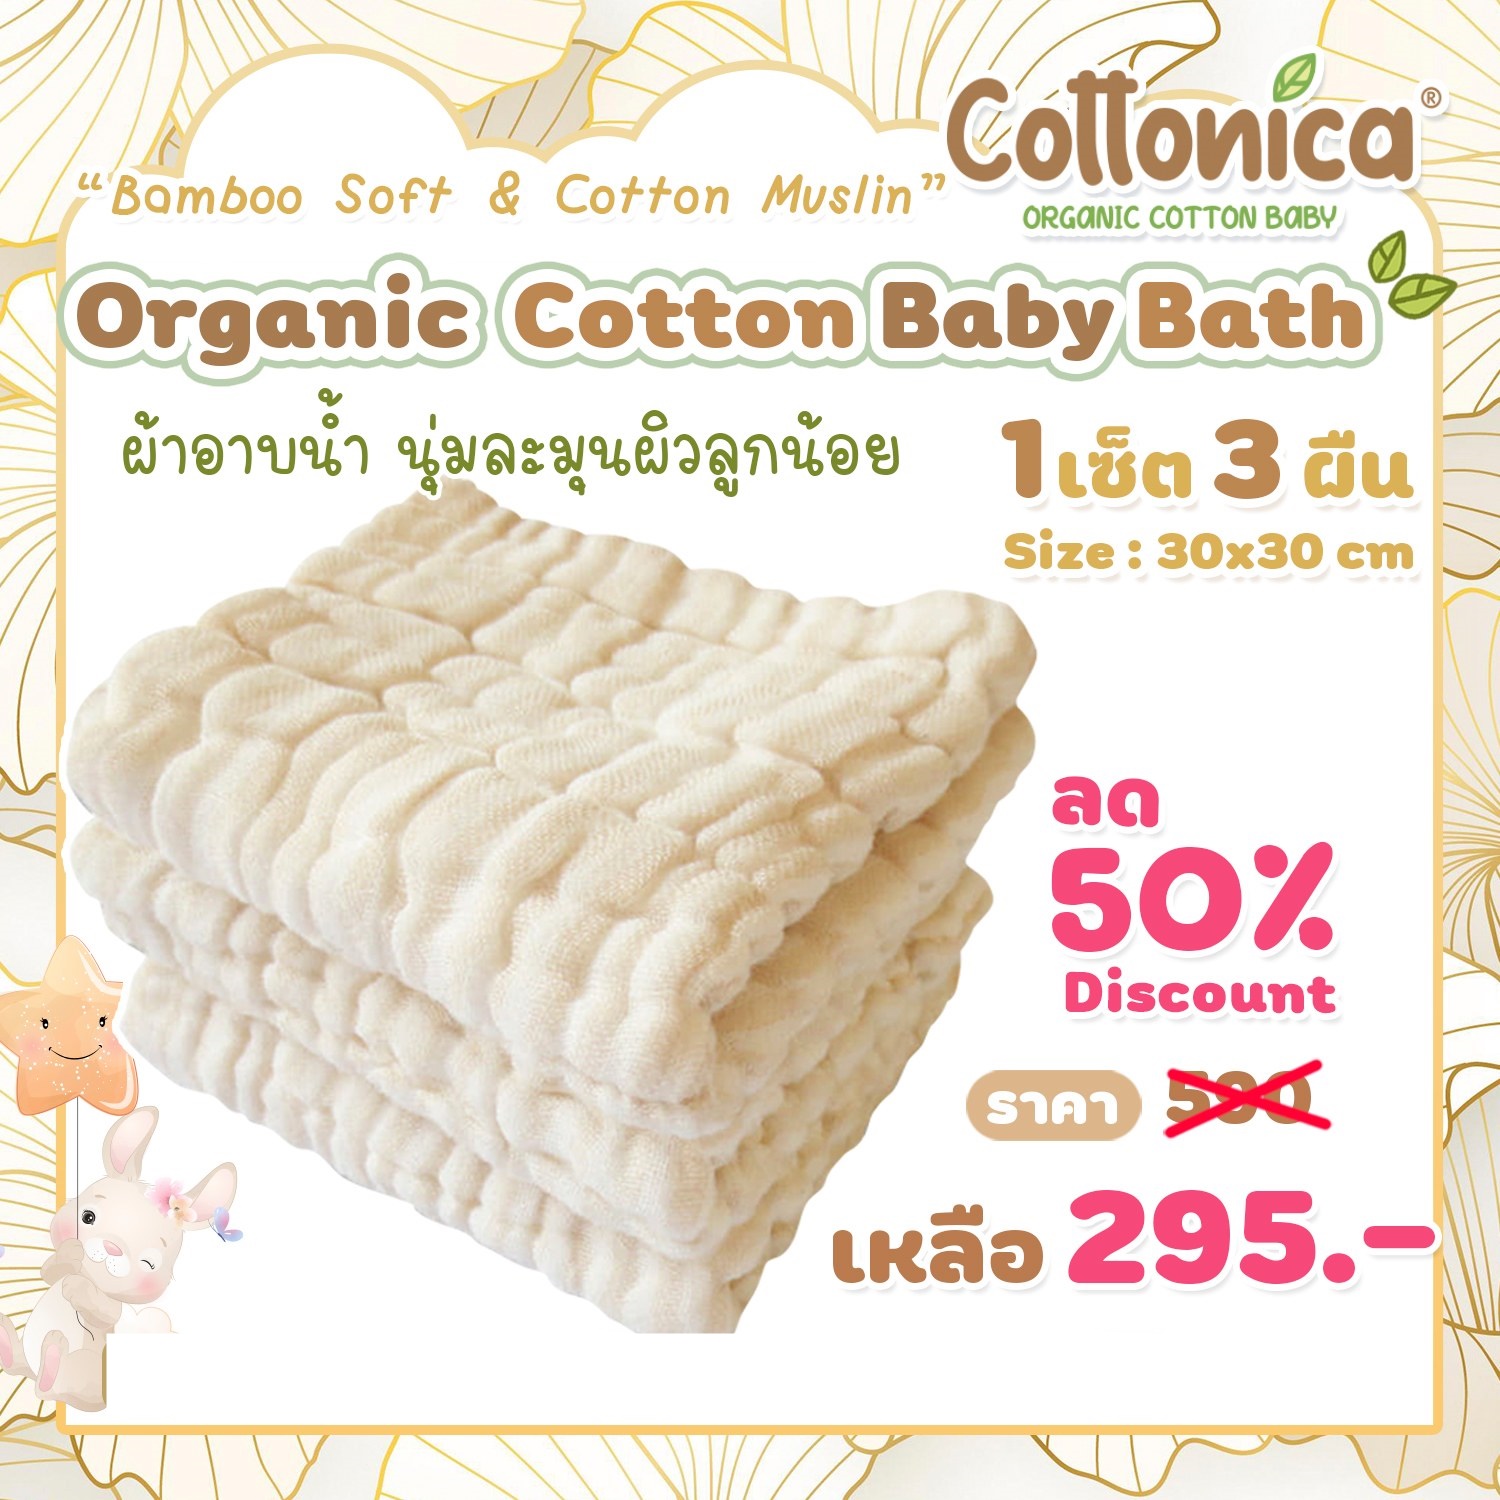 Cotton Muslin ราคาถูก ซื้อออนไลน์ที่ - ต.ค. 2022 | Lazada.co.th